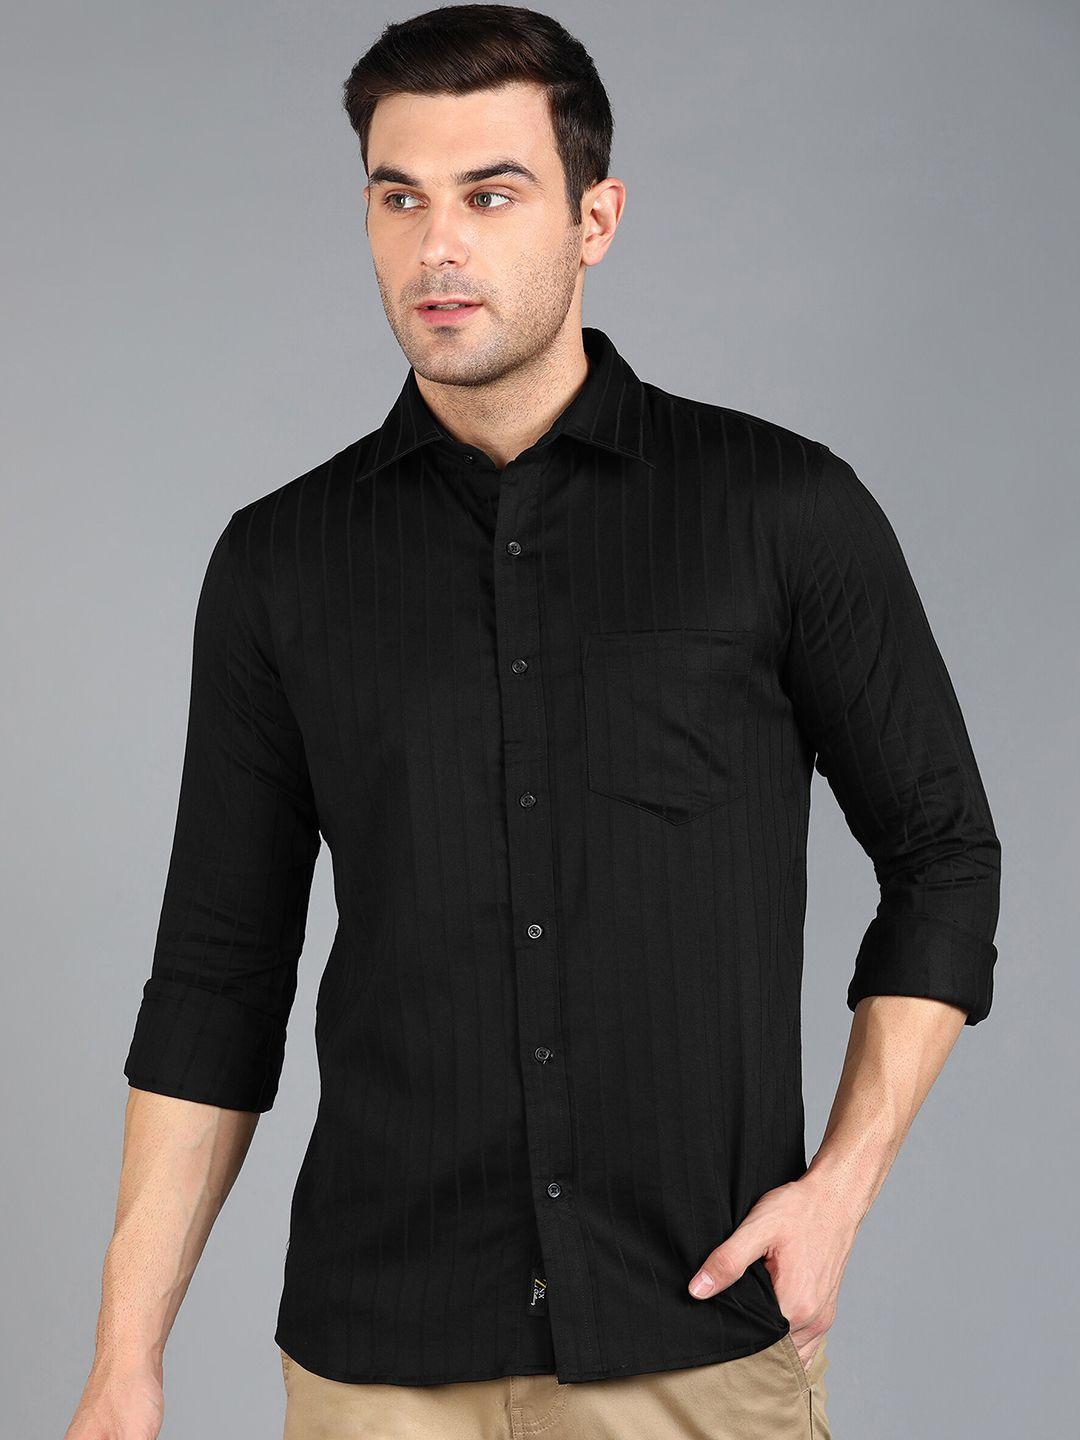 znx-clothing-men-black-premium-slim-fit-opaque-checked-formal-shirt